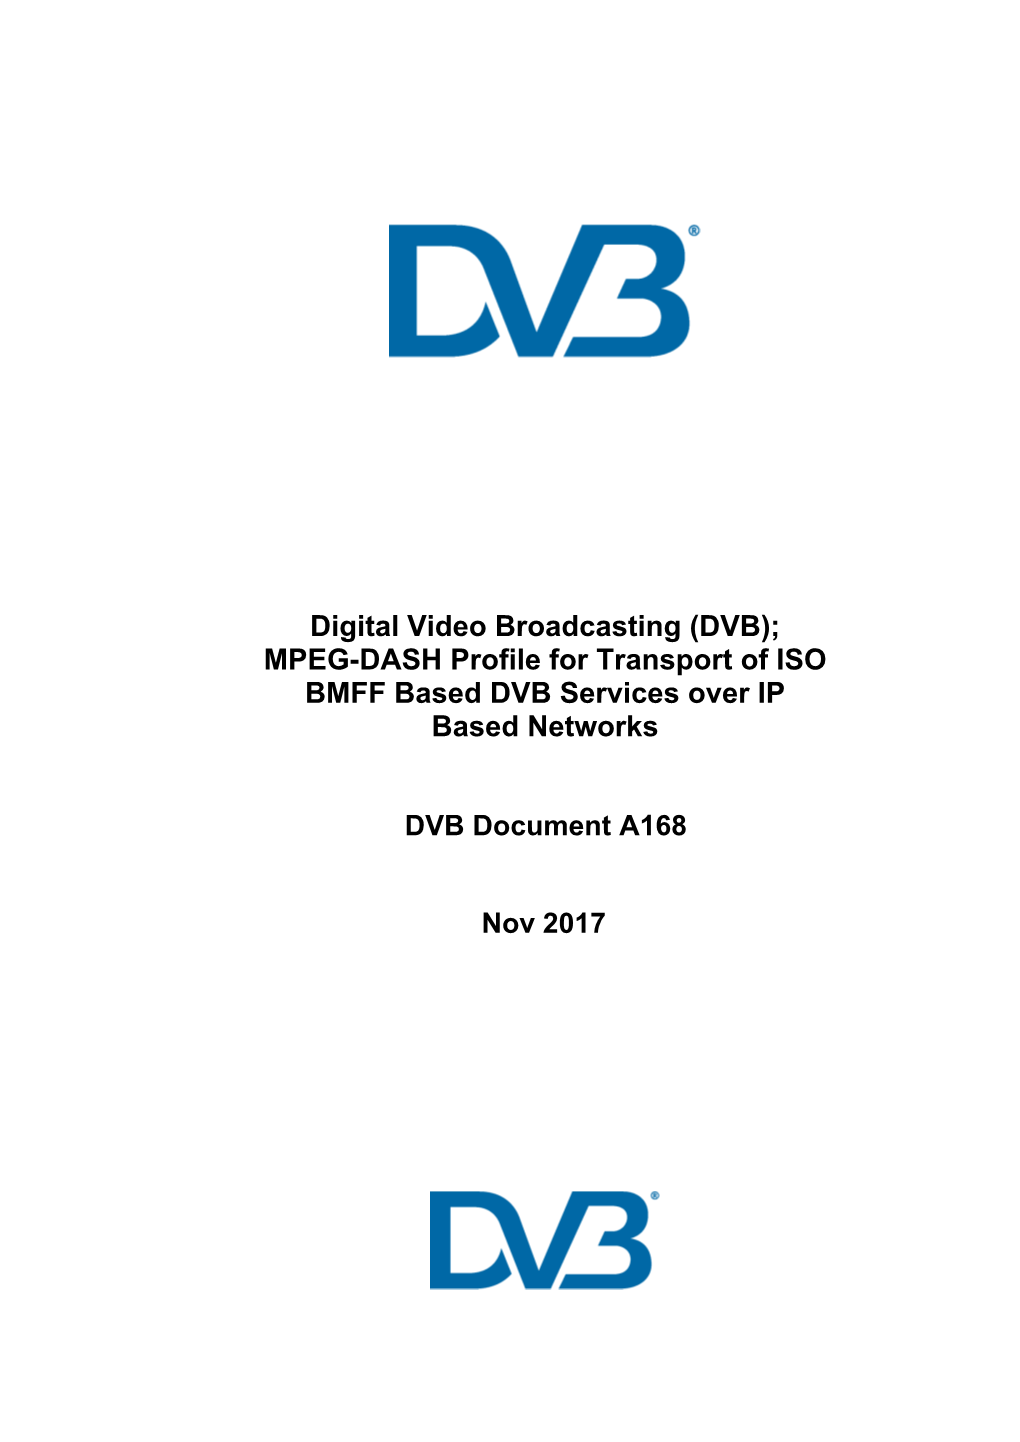 Digital Video Broadcasting (DVB); MPEG-DASH Profile for Transport of ISO BMFF Based DVB Services Over IP Based Networks